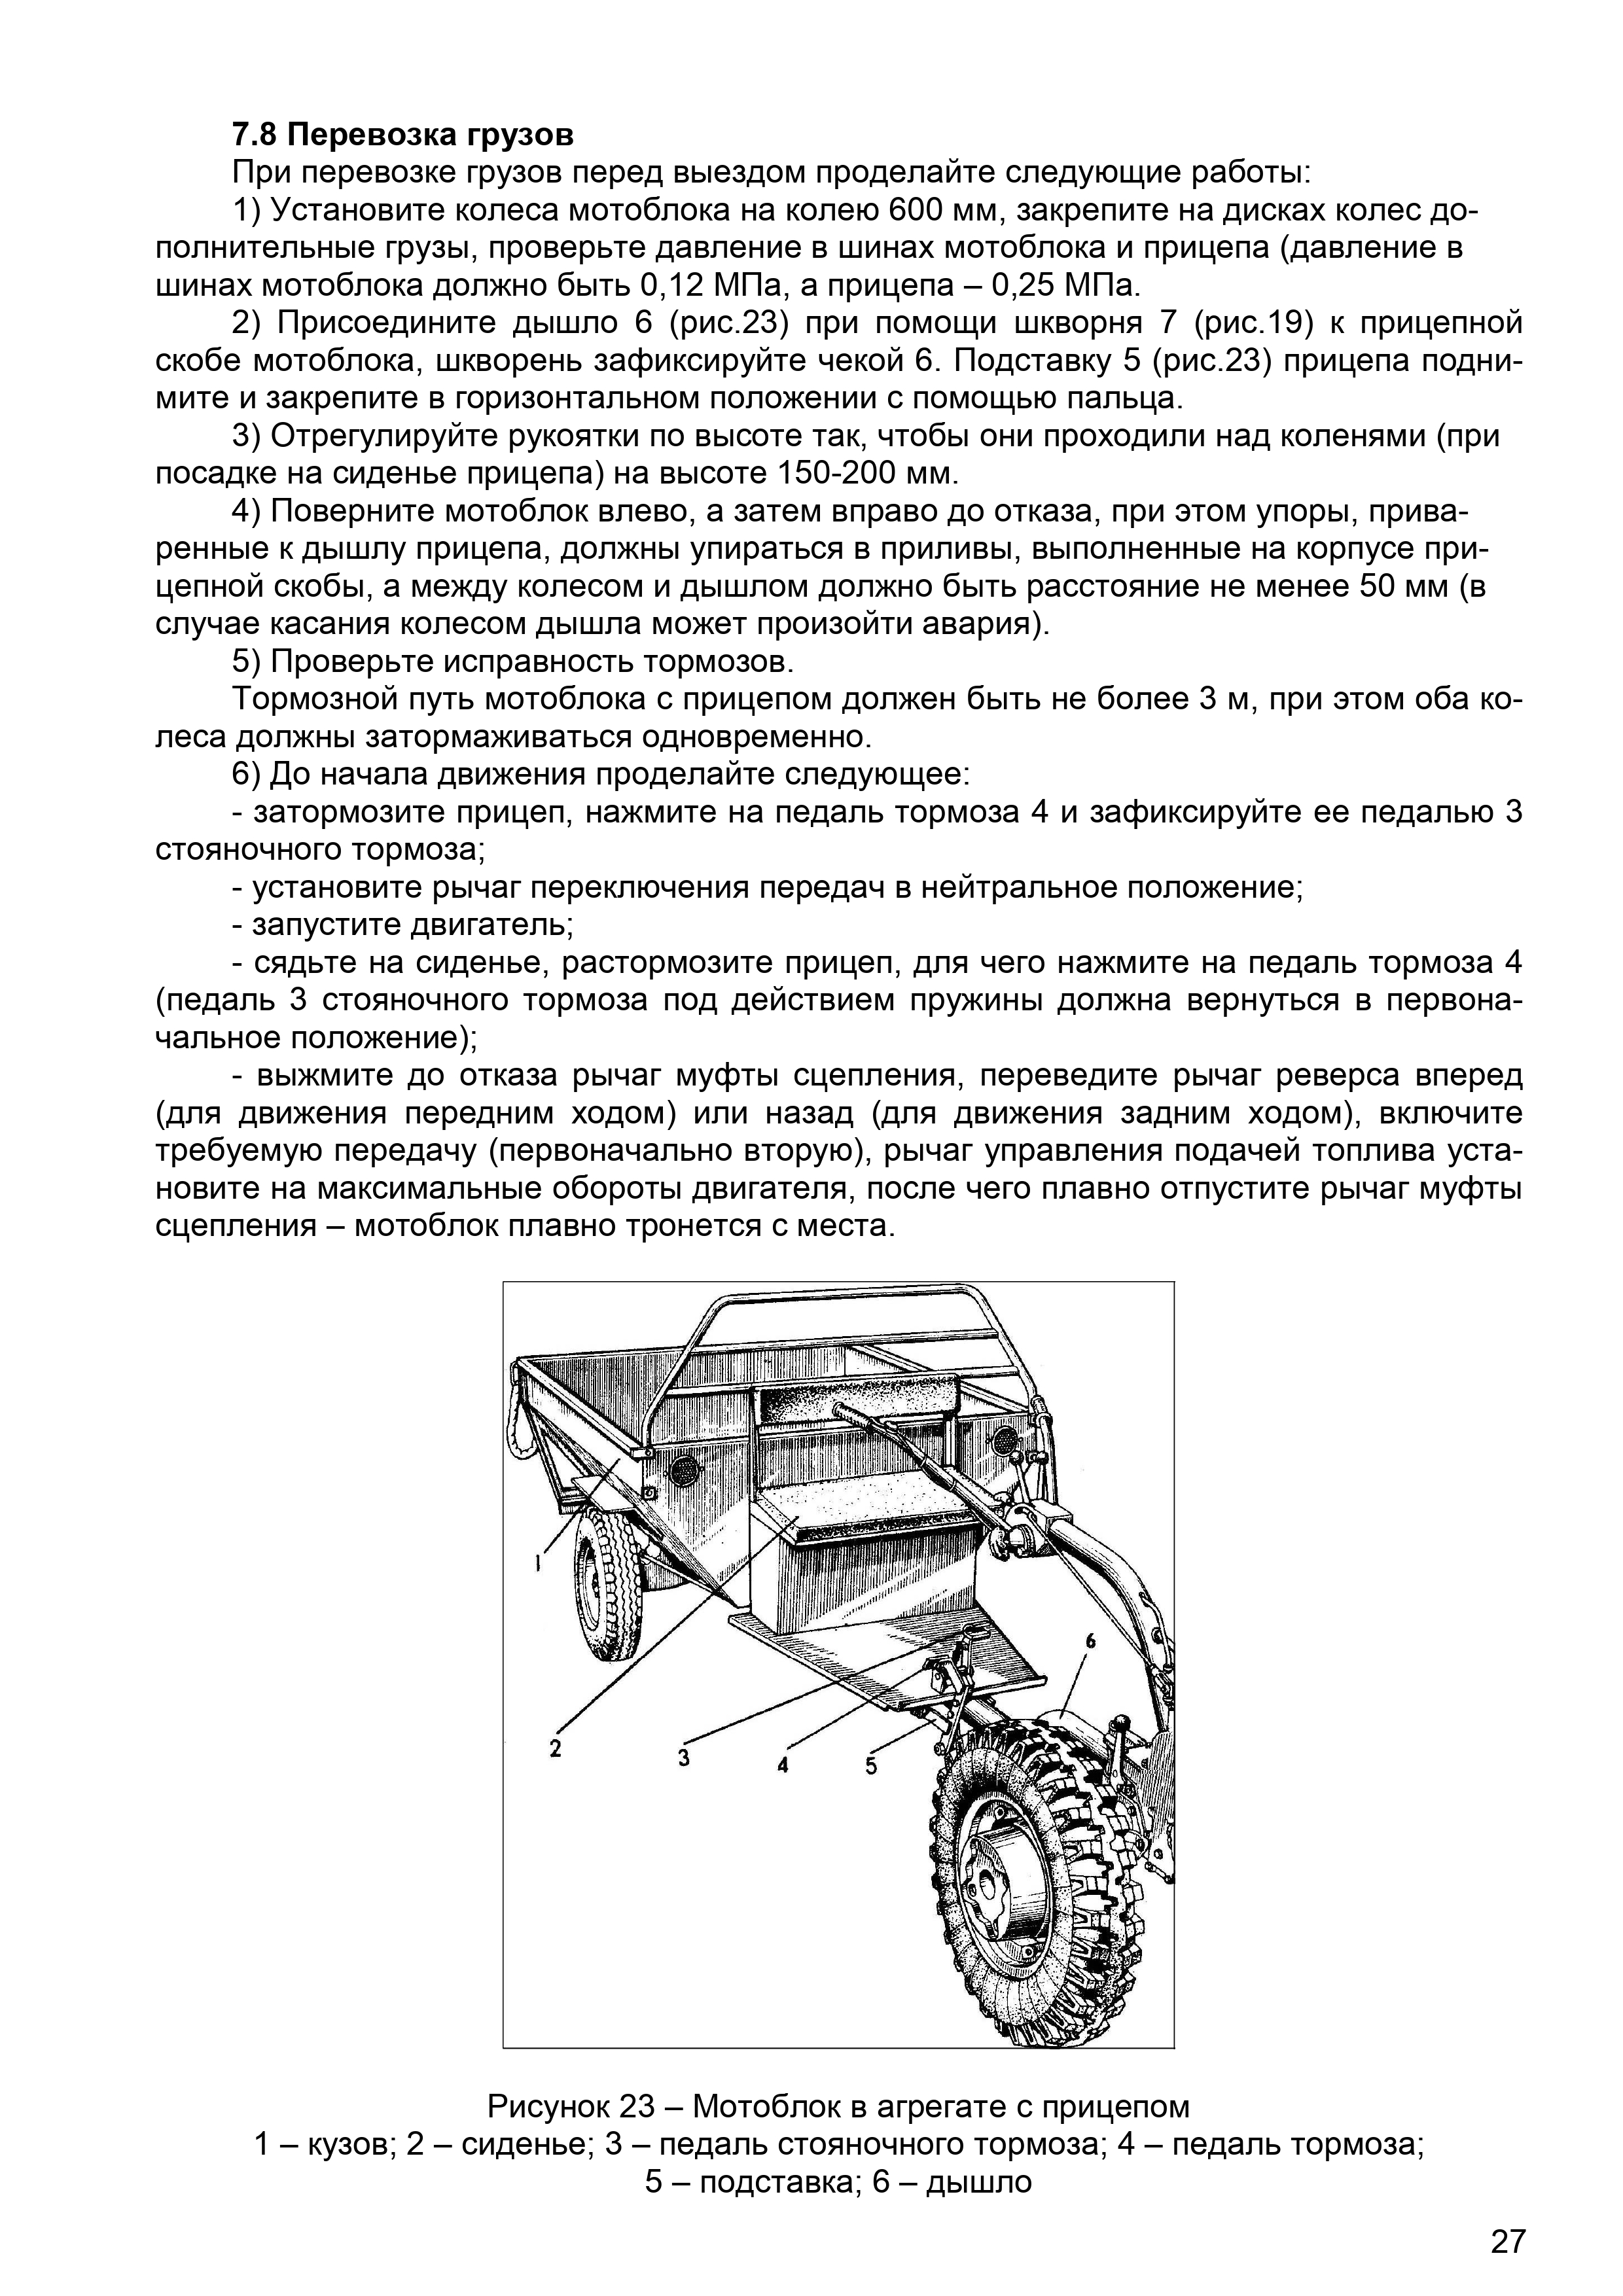 belarus_09h_manual i catalog (1)_page-0027